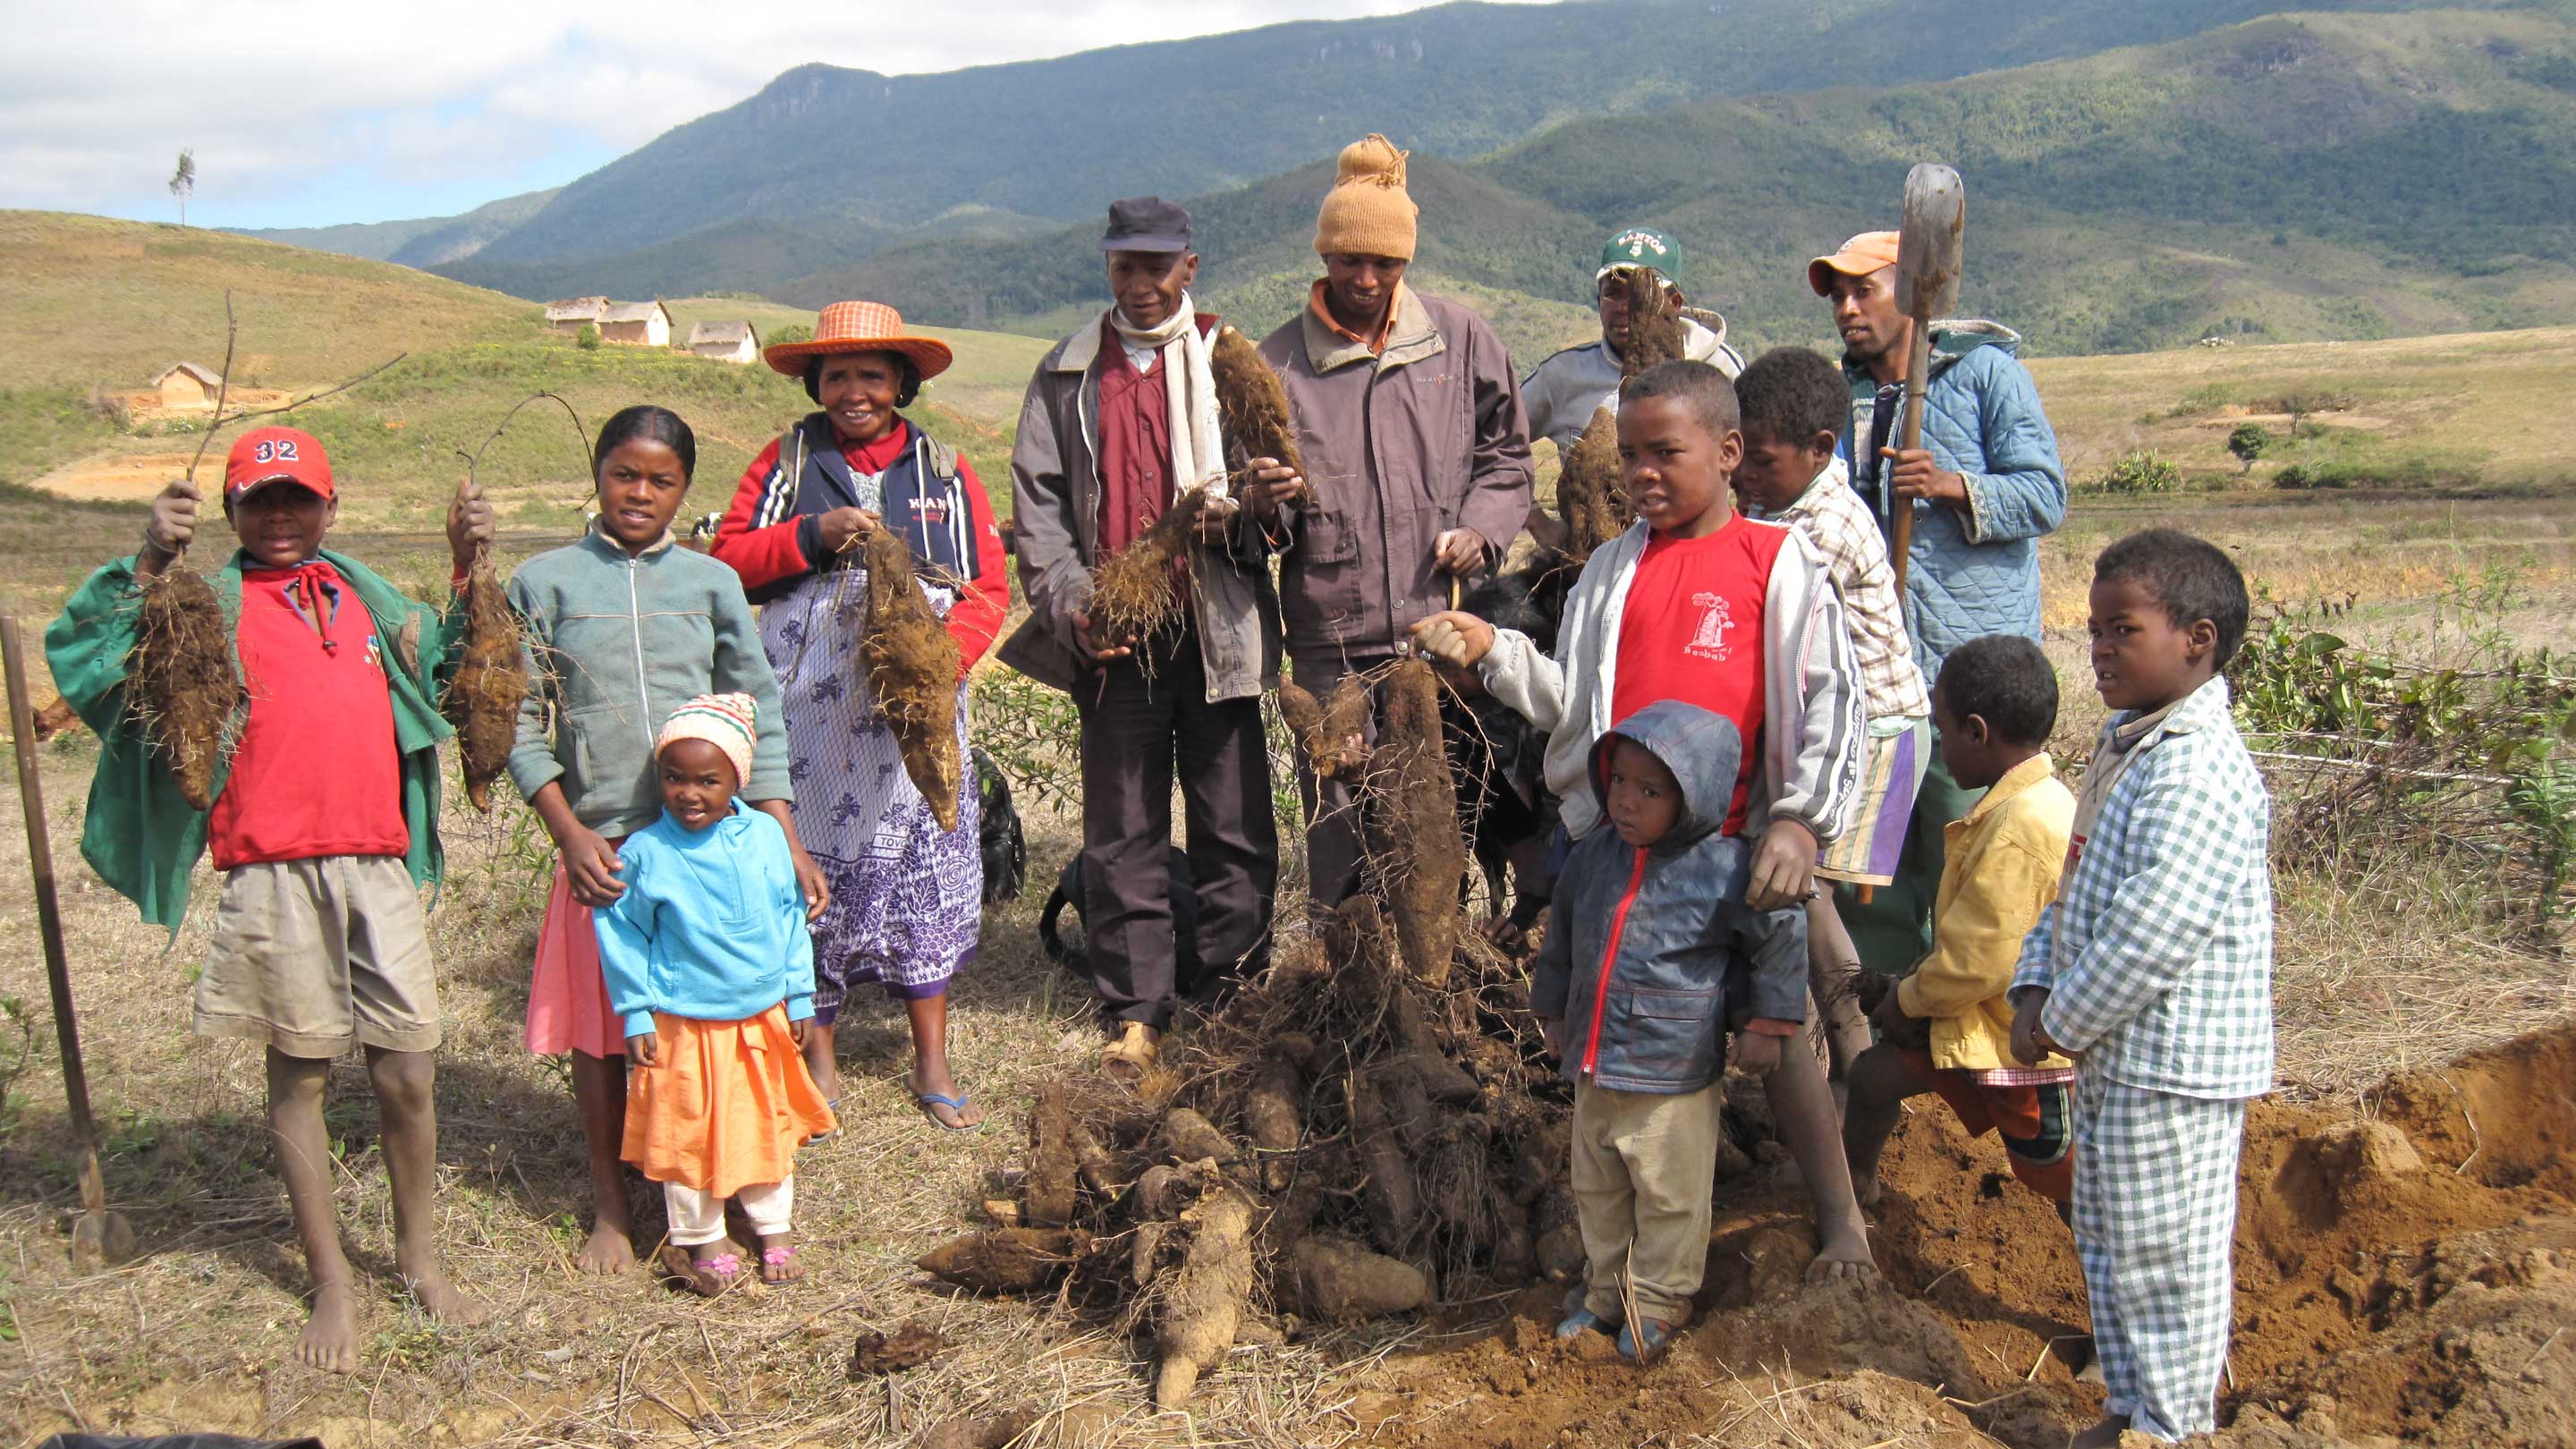 Yams harvesting in Madagascar